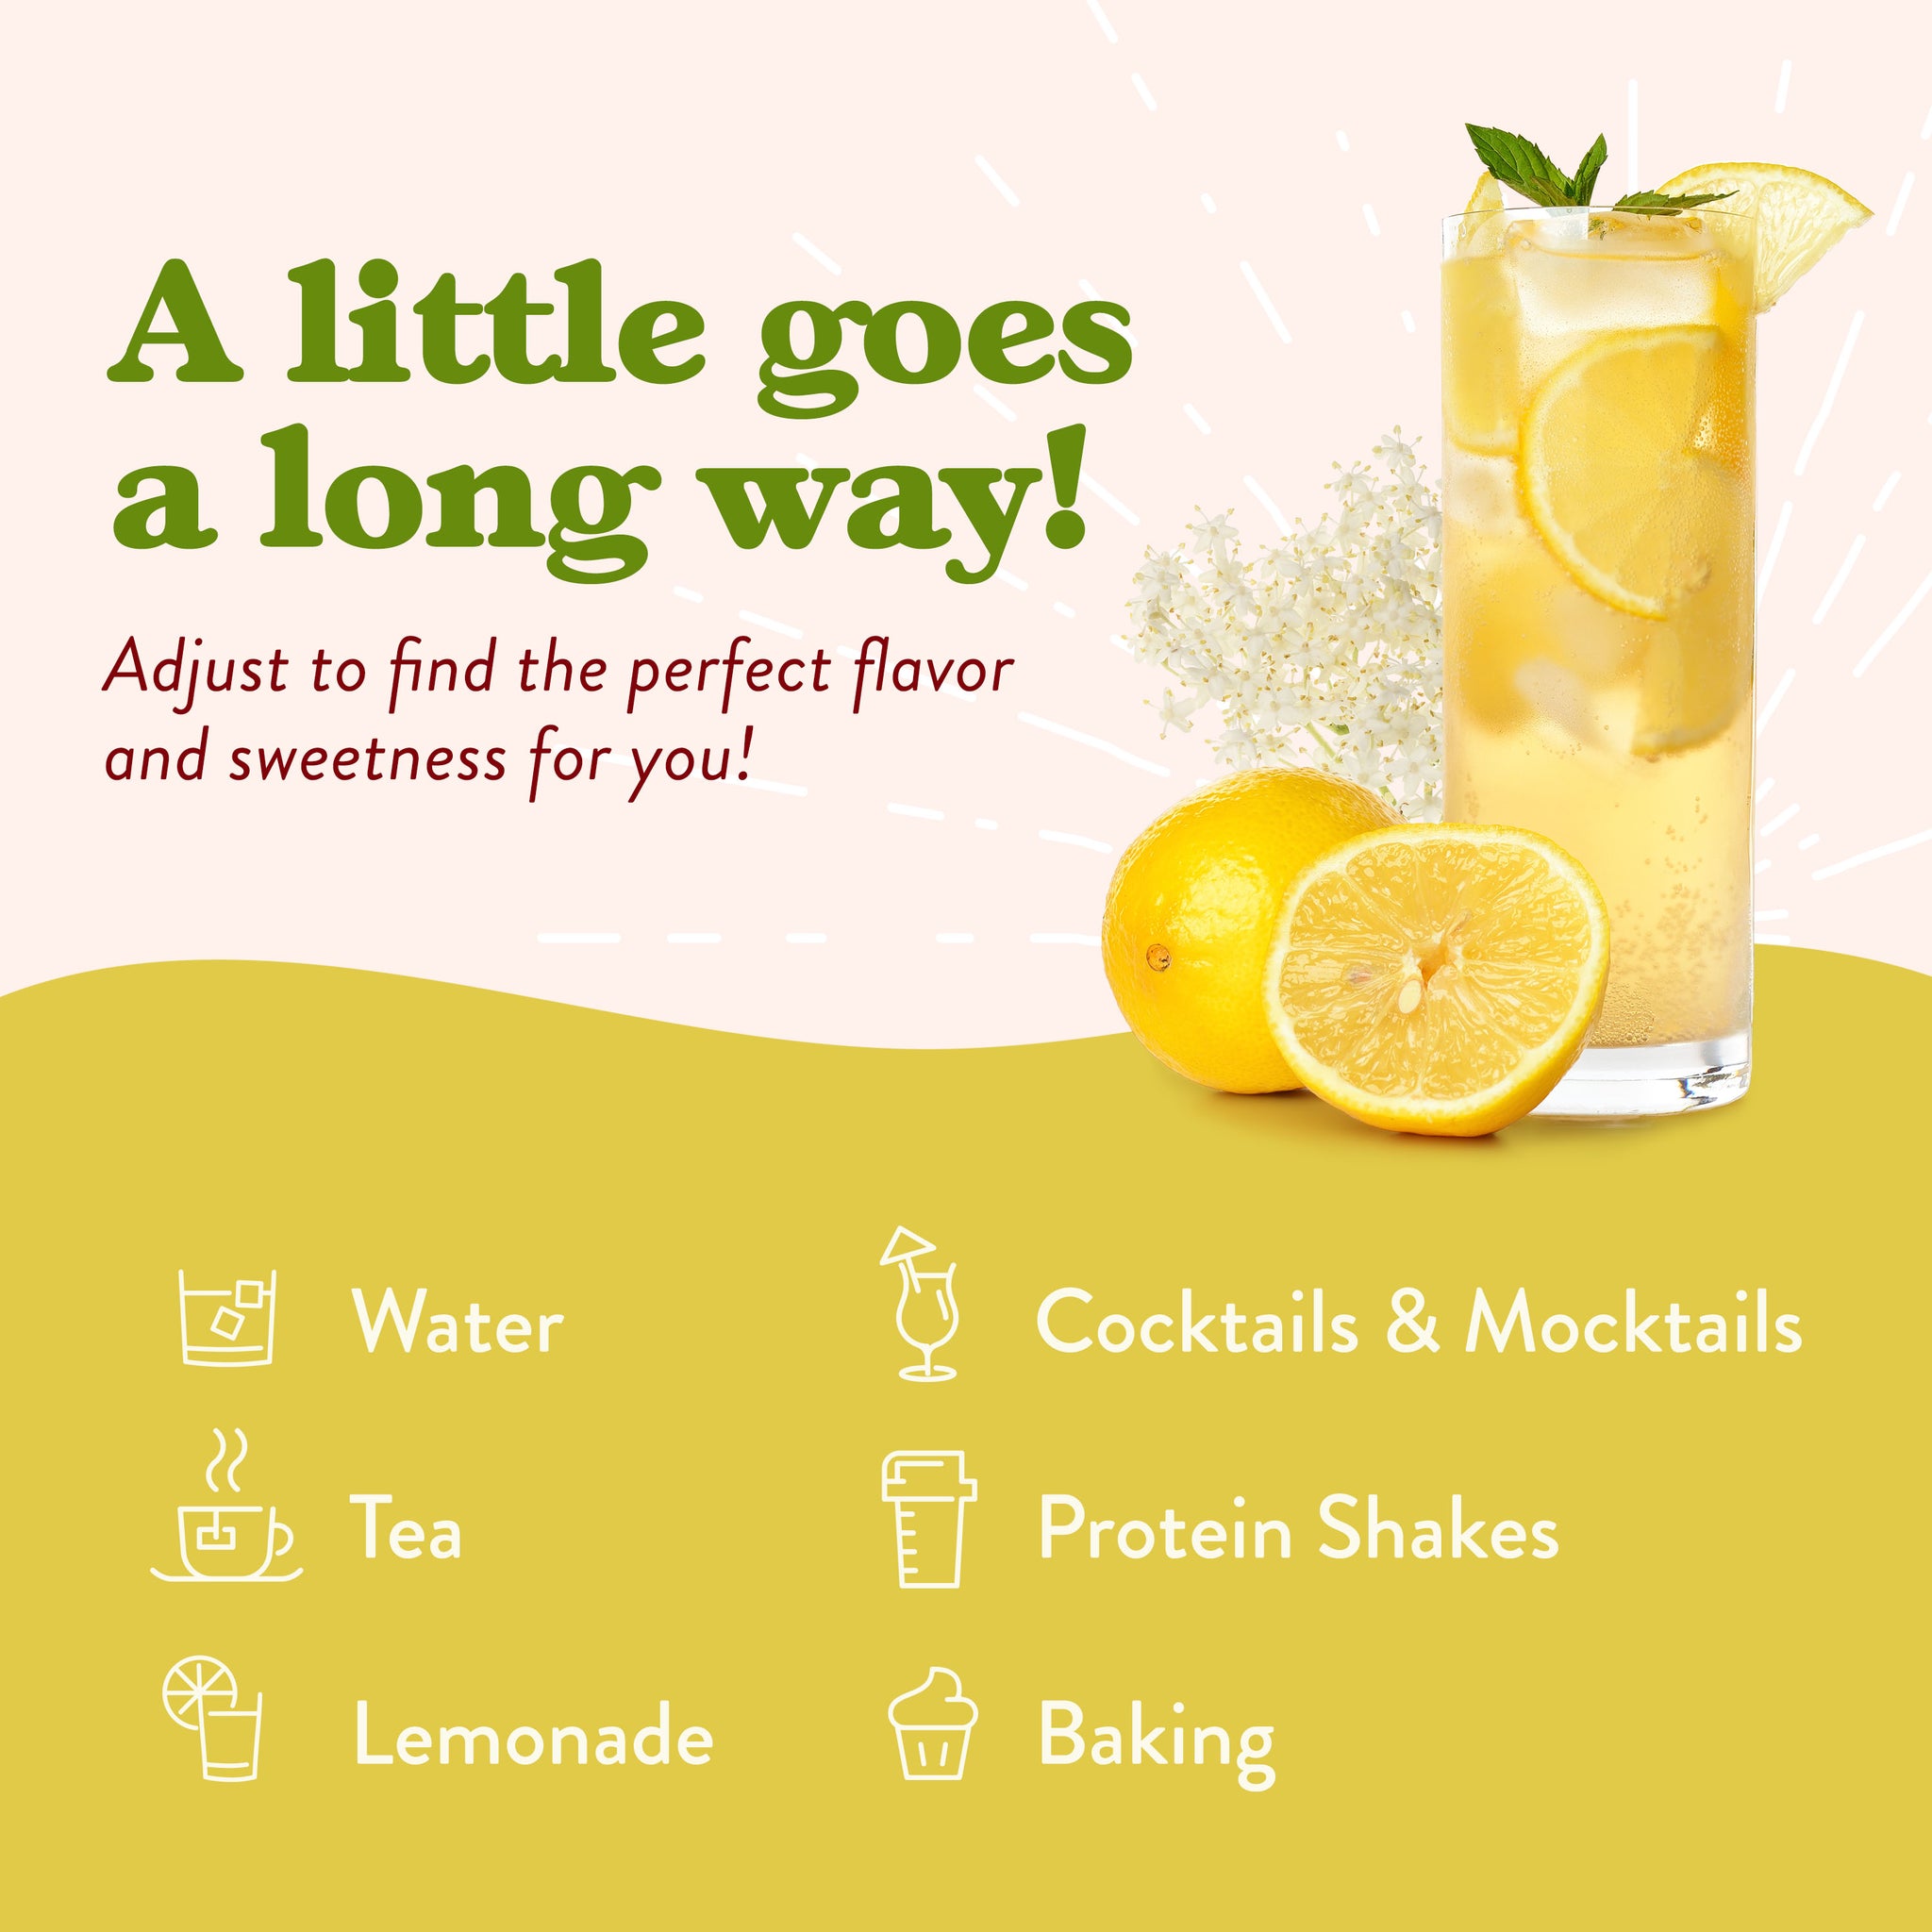 Sugar Free Lemon Elderflower Syrup